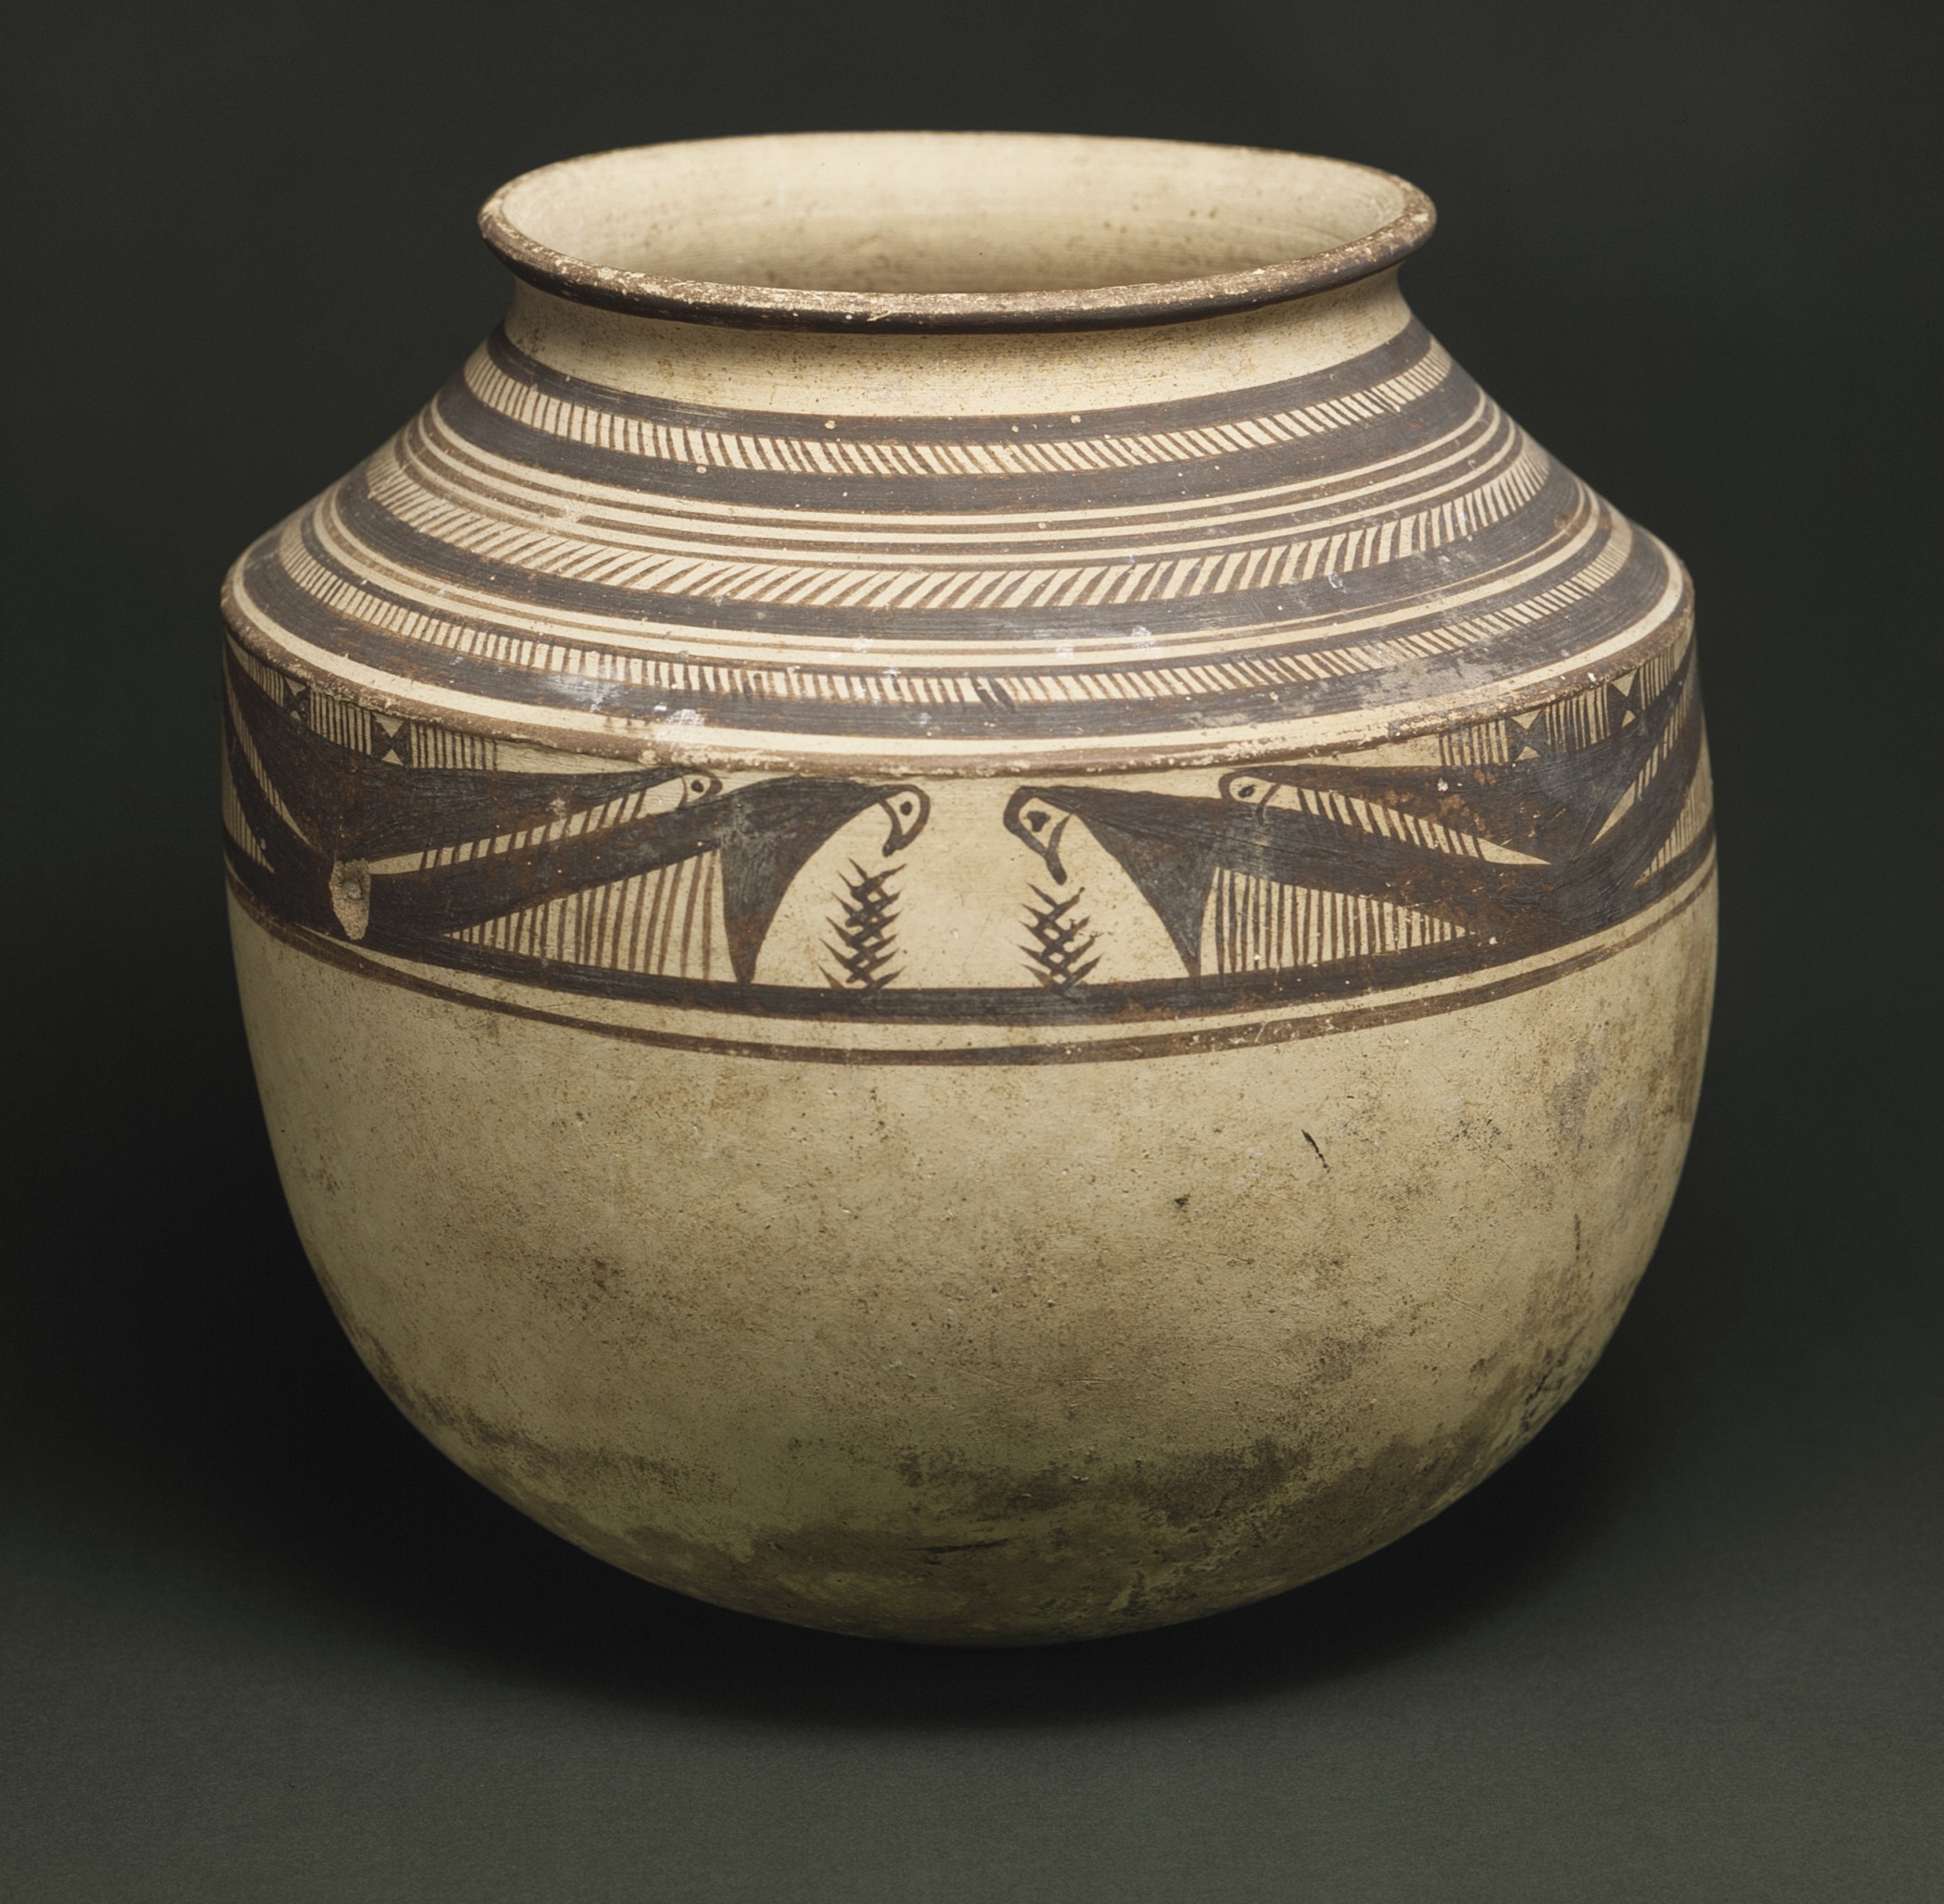 1900 b c. Collection of Pottery Vessels. Armenian Antique Pottery. Pottery Jar.